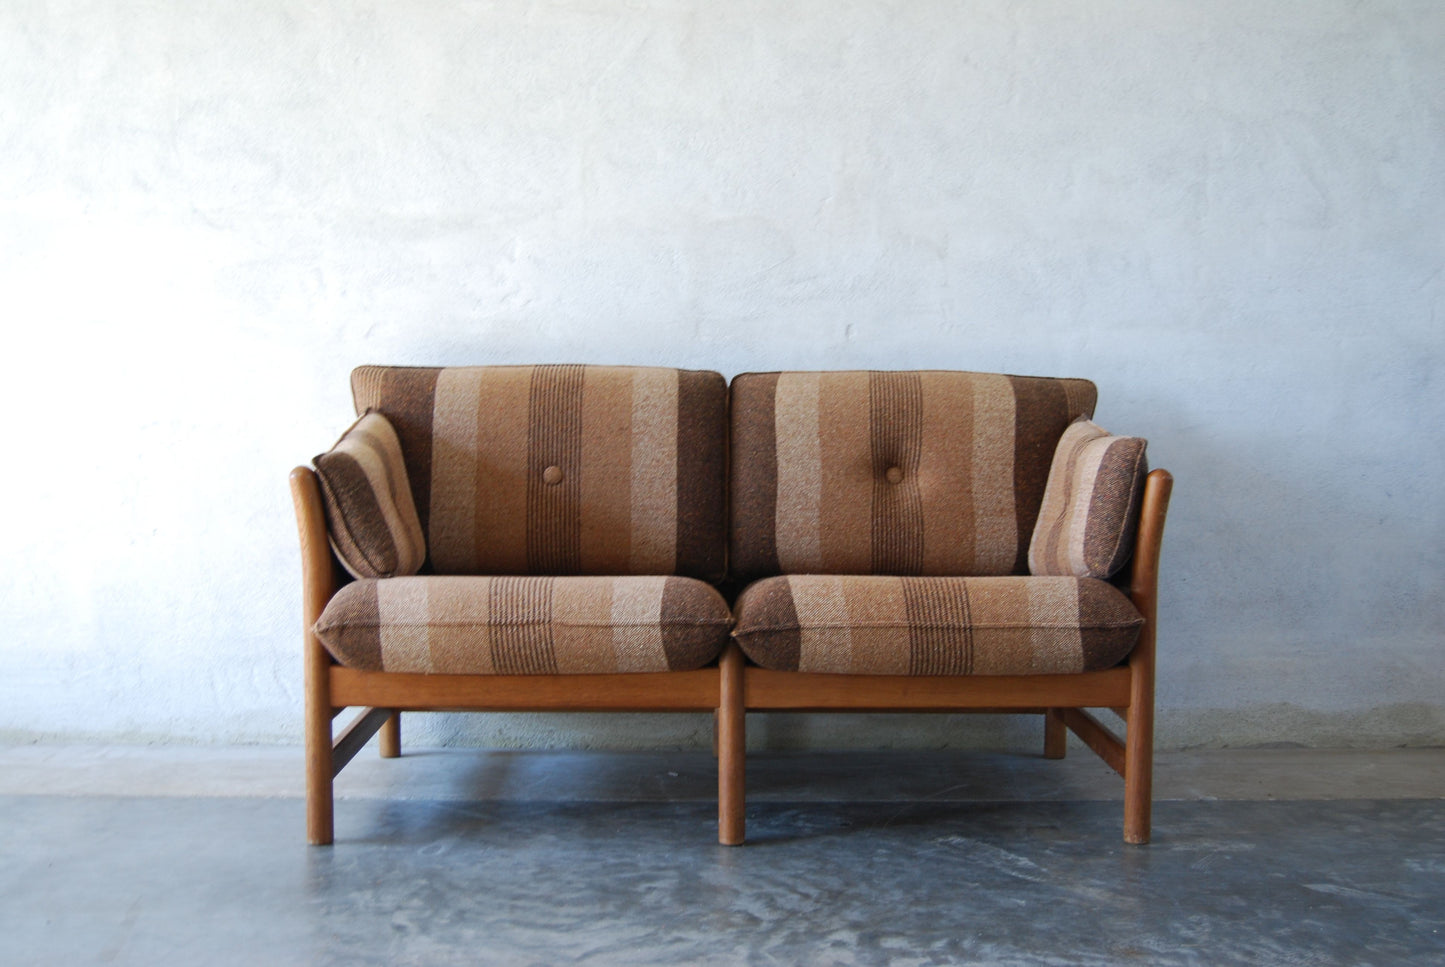 Two seat oak-framed sofa